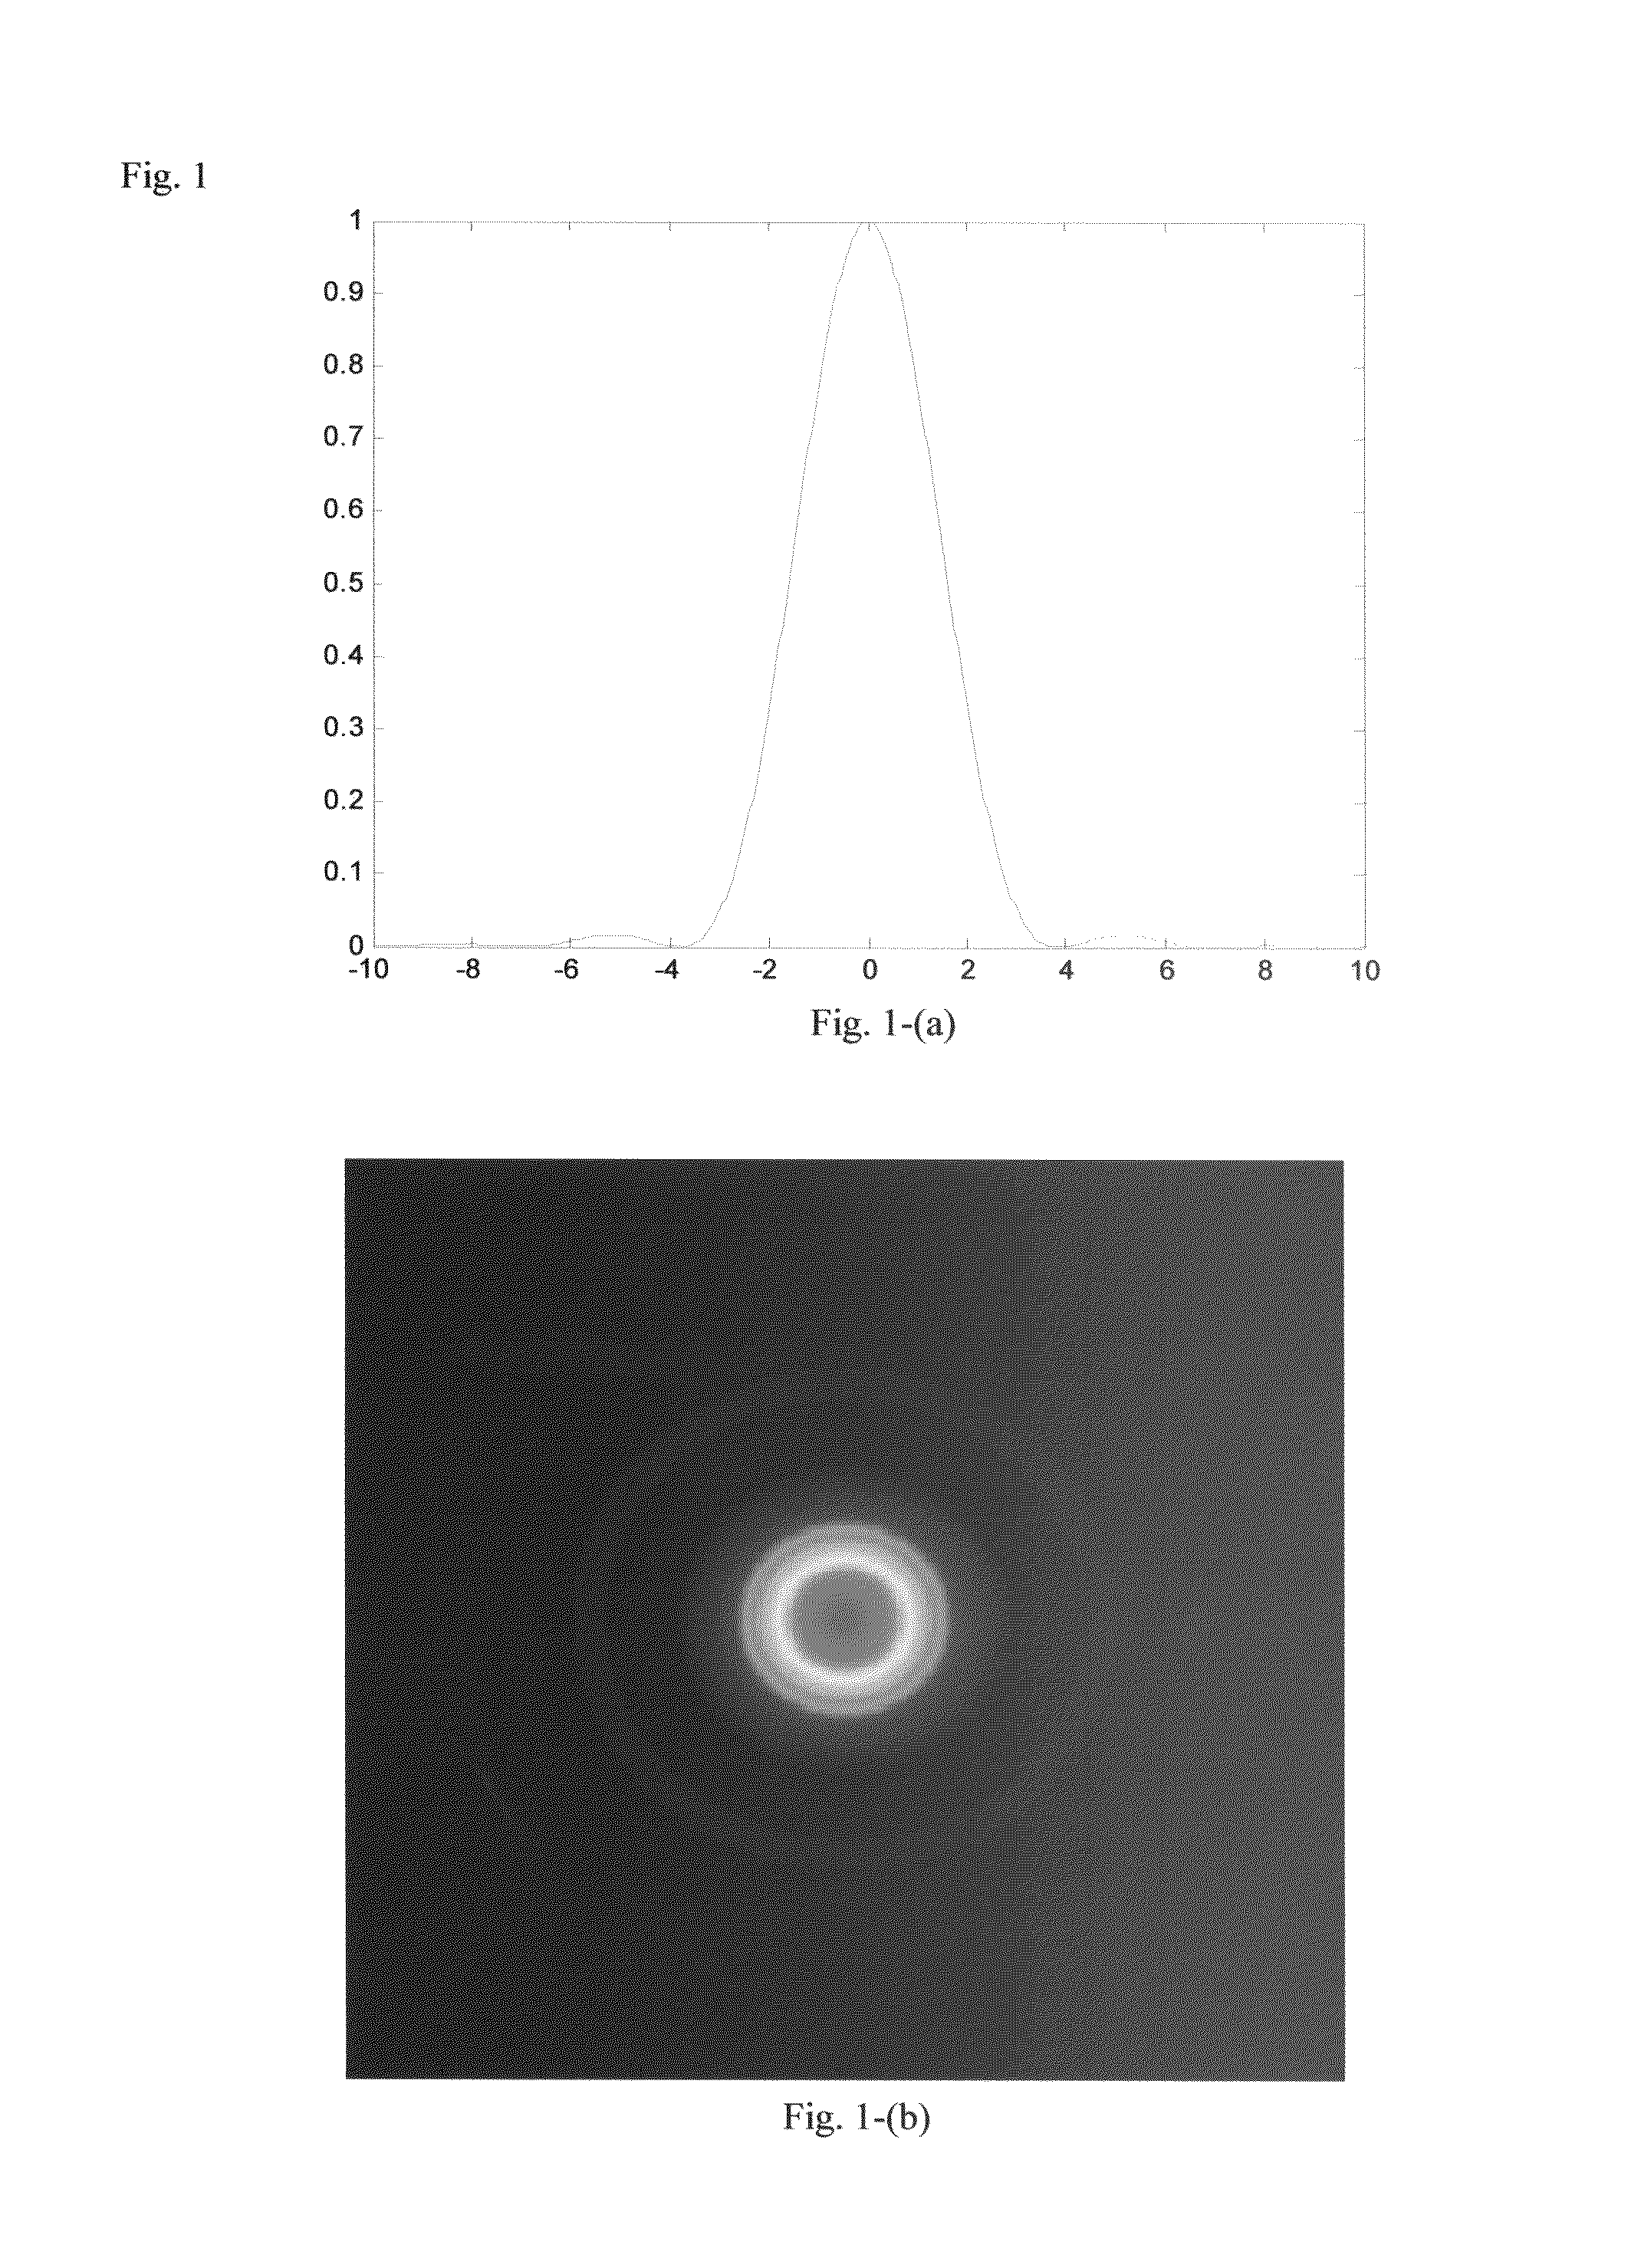 Deconvolution method using neighboring-pixel-optical-transfer-function in fourier domain